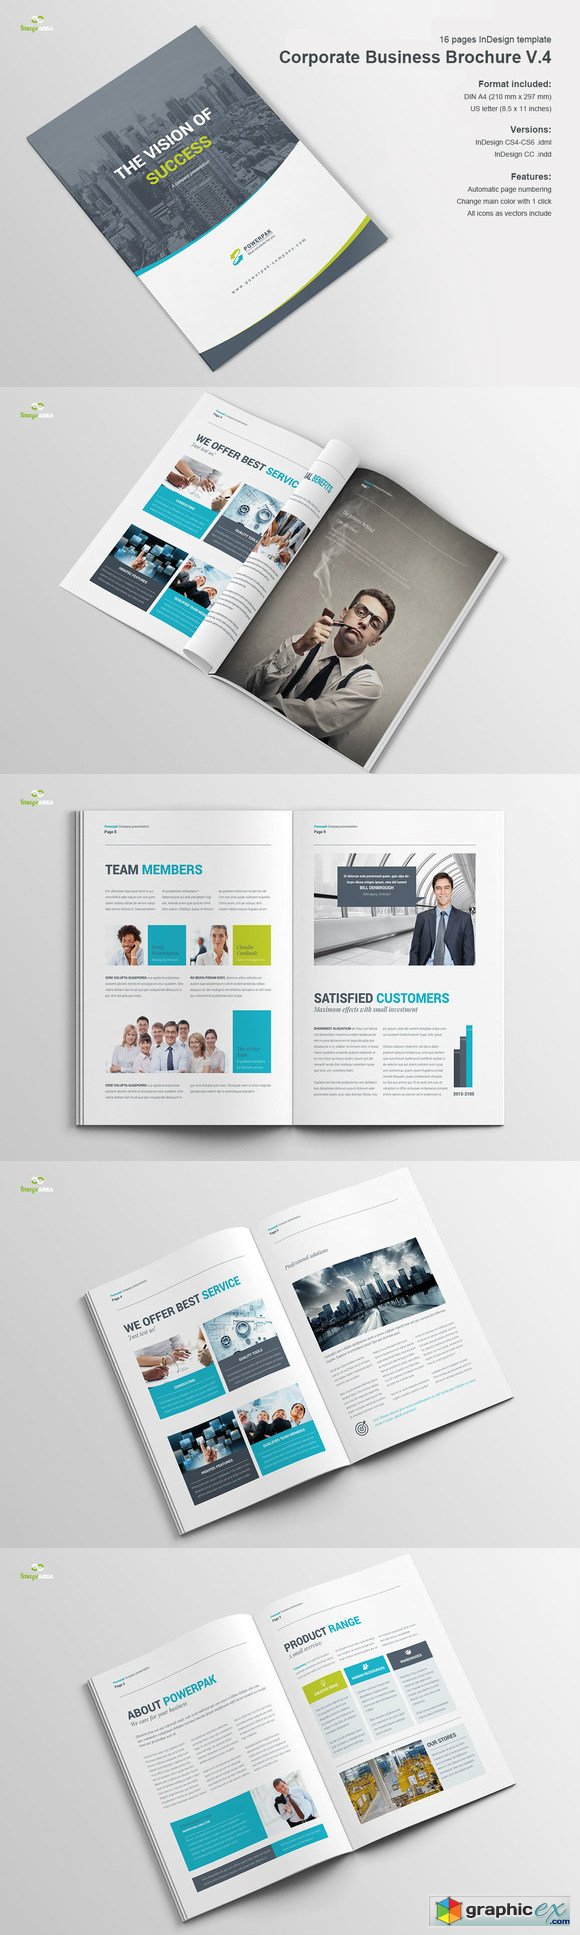 Corporate Business Brochure V4